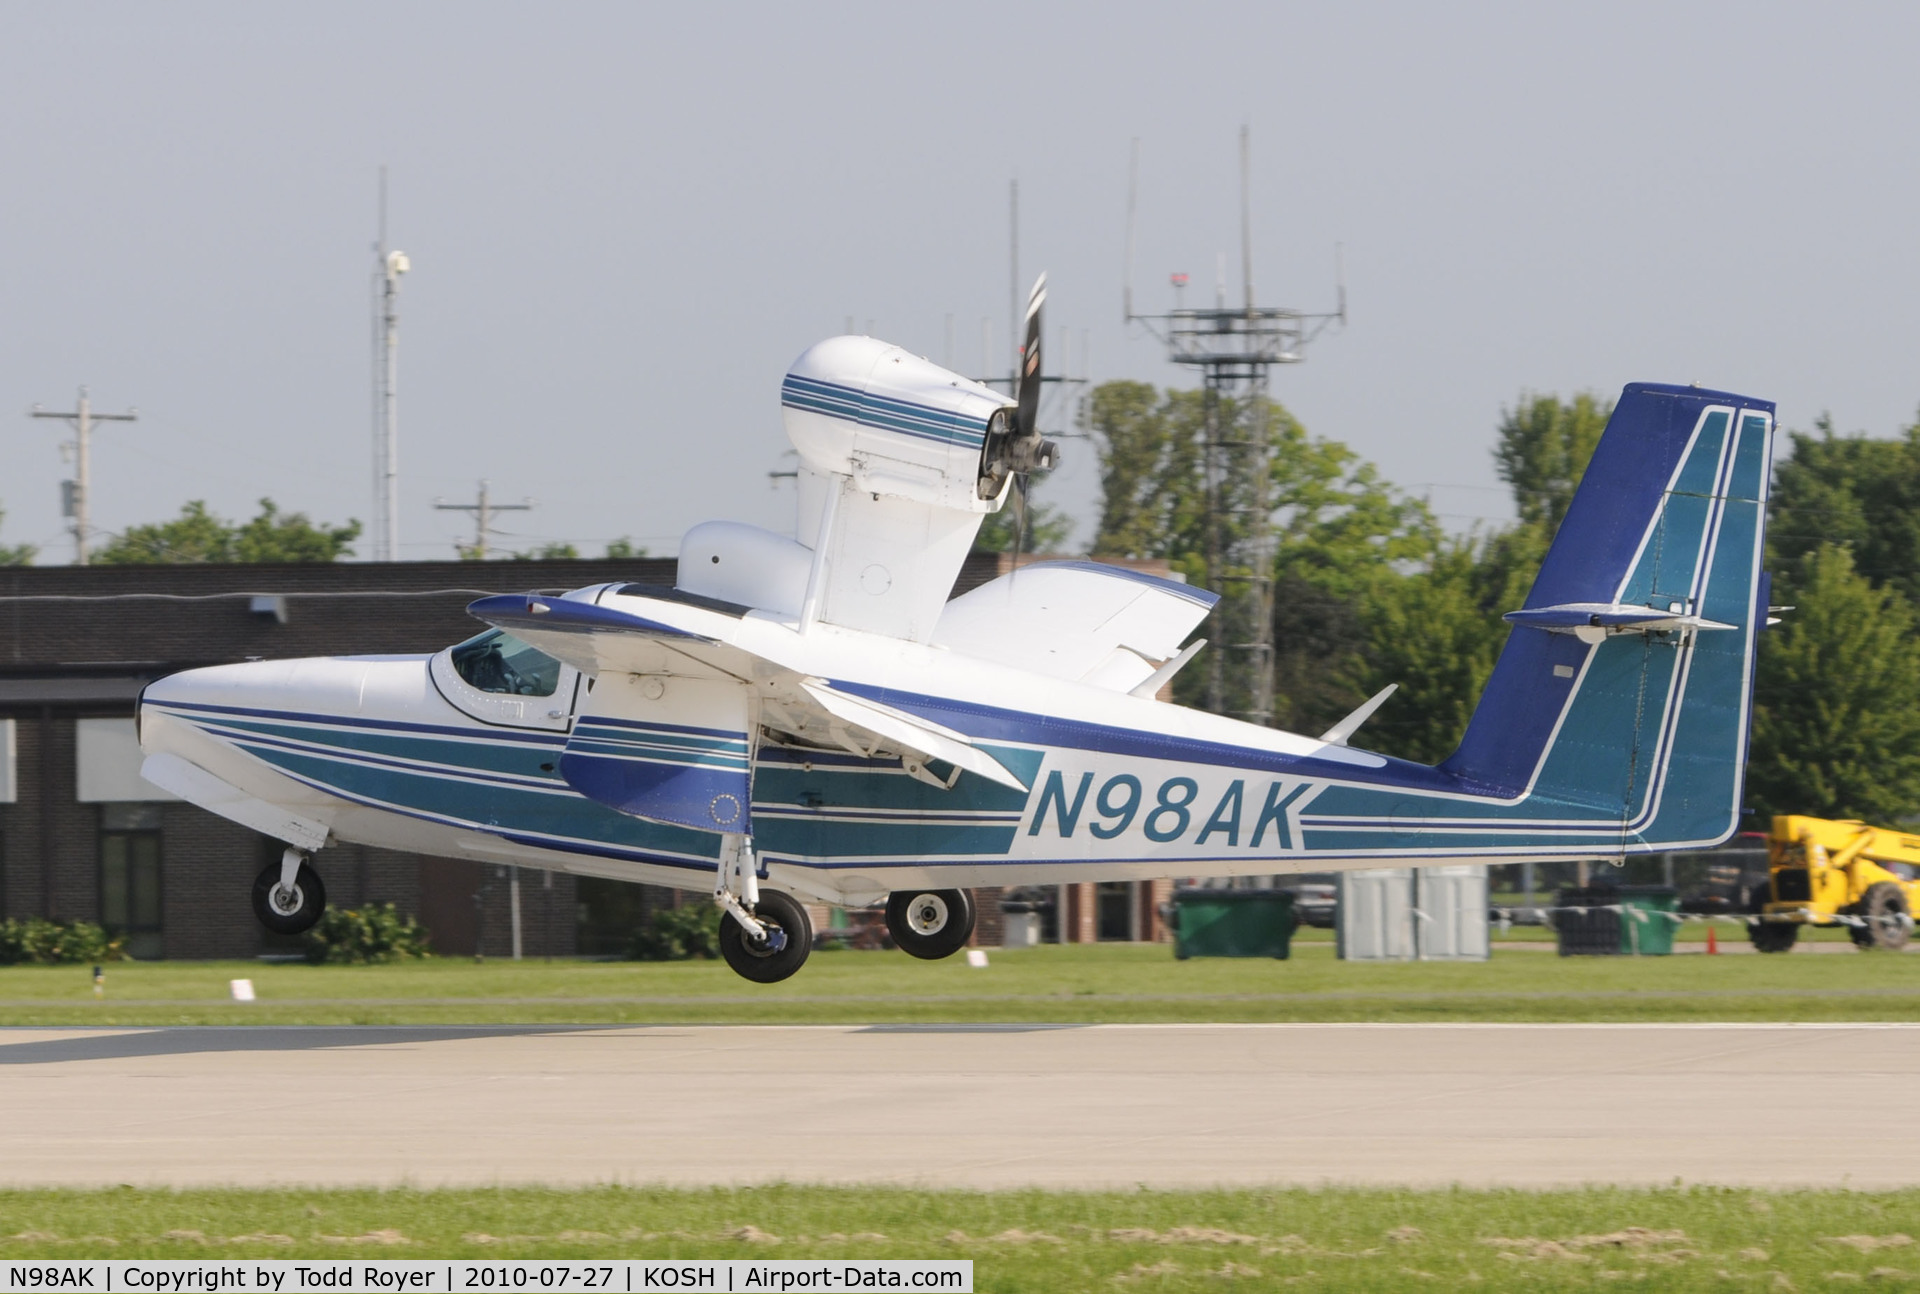 N98AK, 1977 Consolidated Aeronautics Inc. Lake LA-4-200 C/N 806, EAA AIRVENTURE 2010